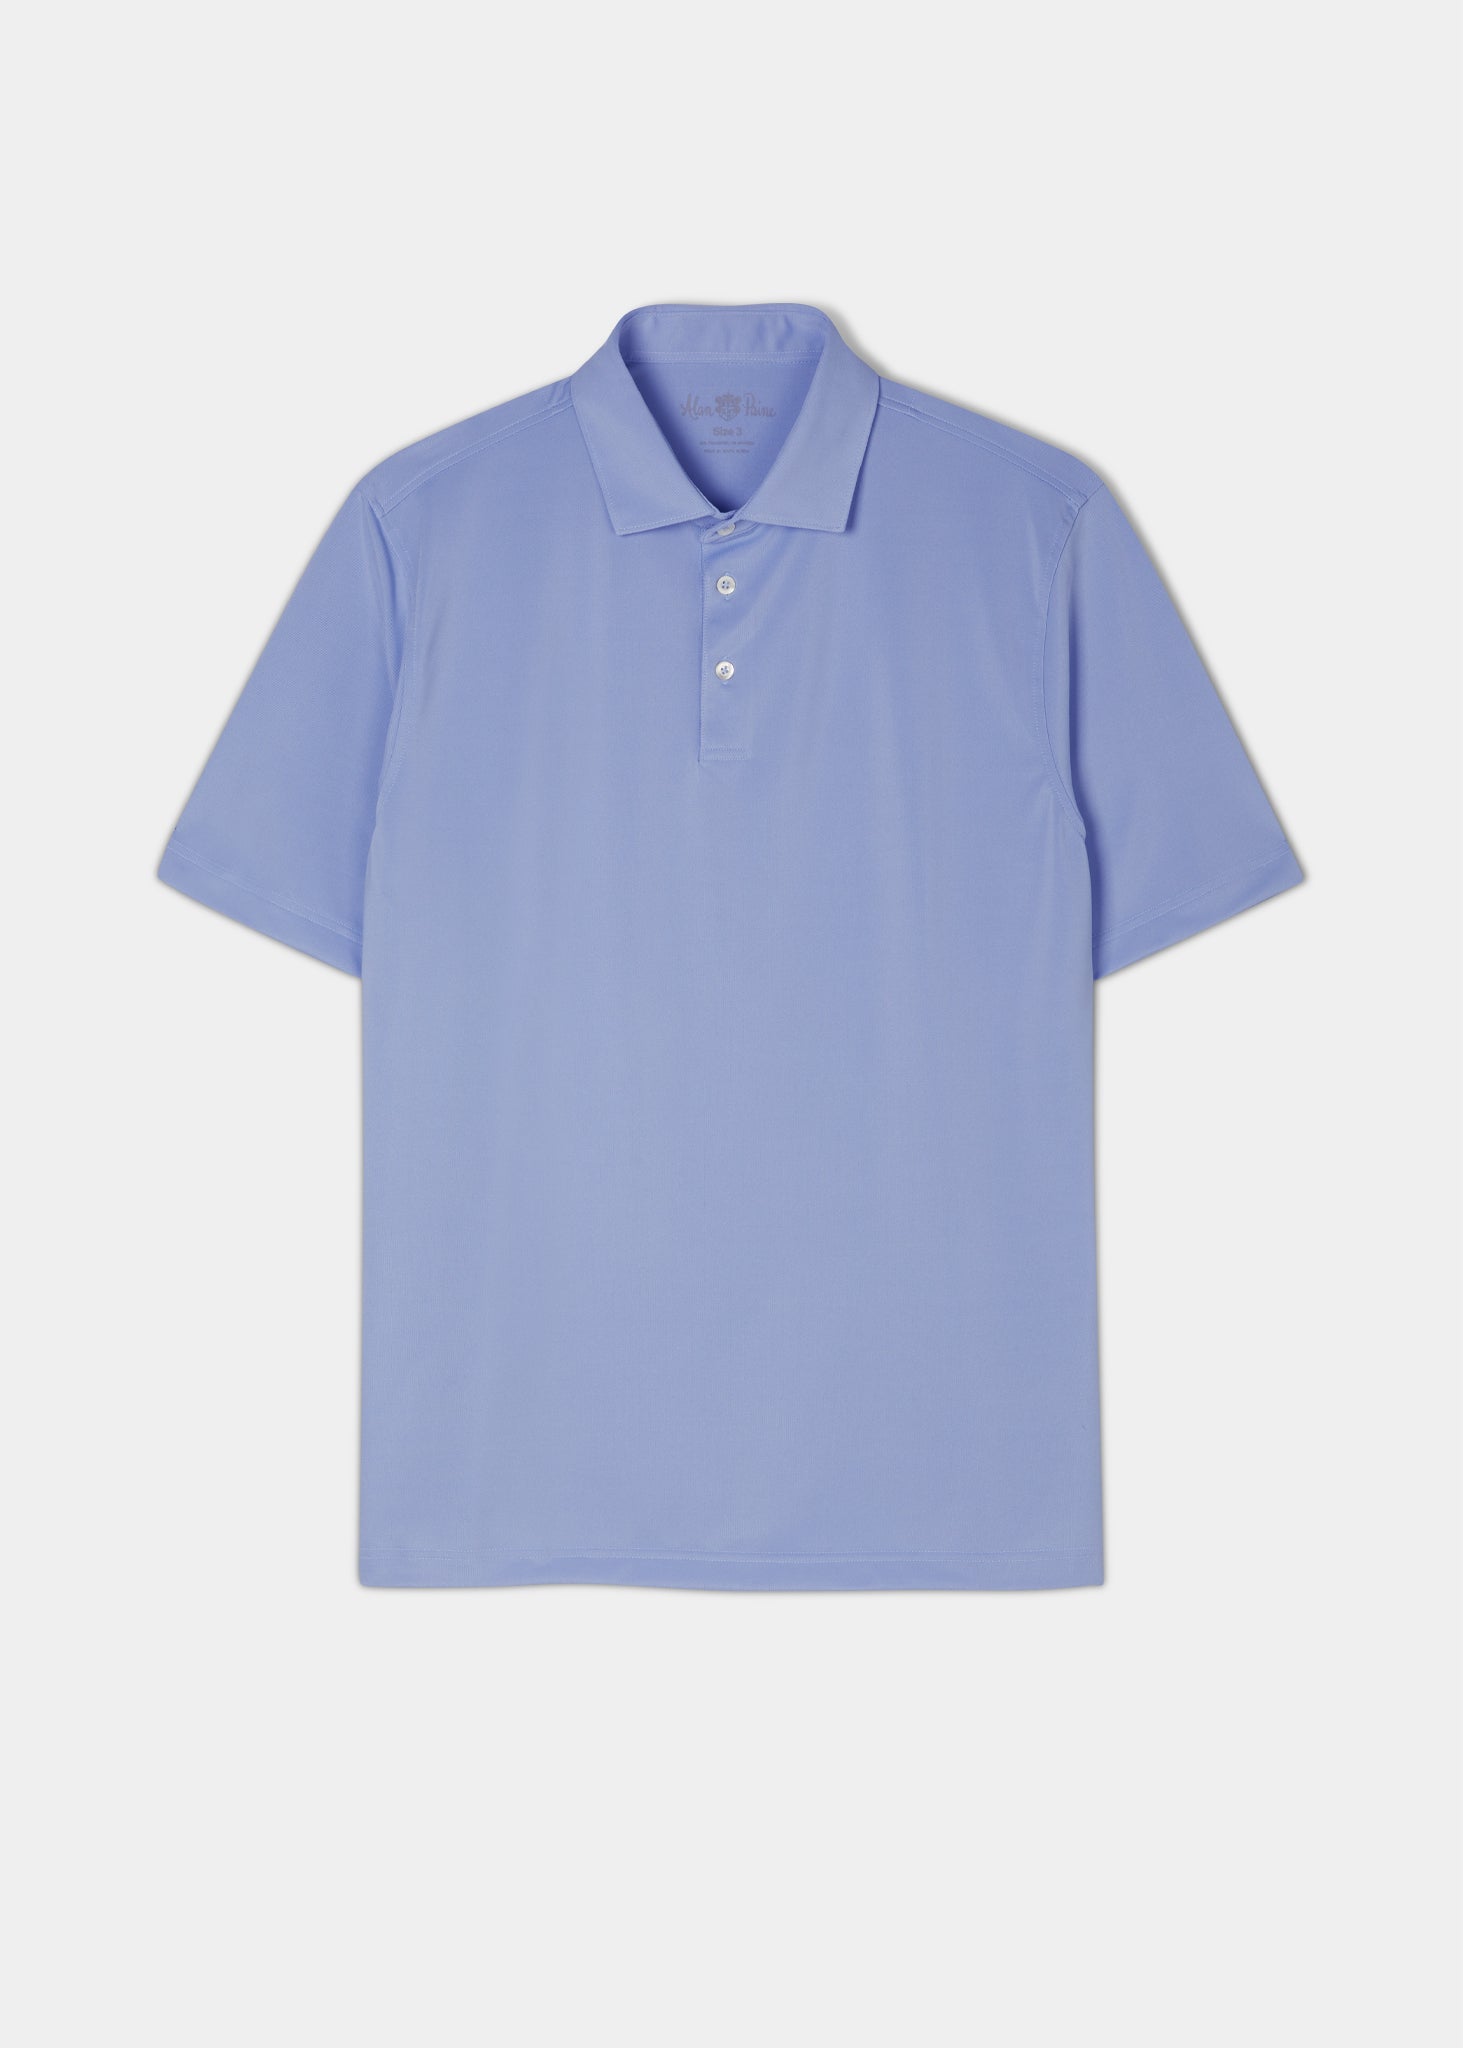 Men's 3 button polo shirt in light blue